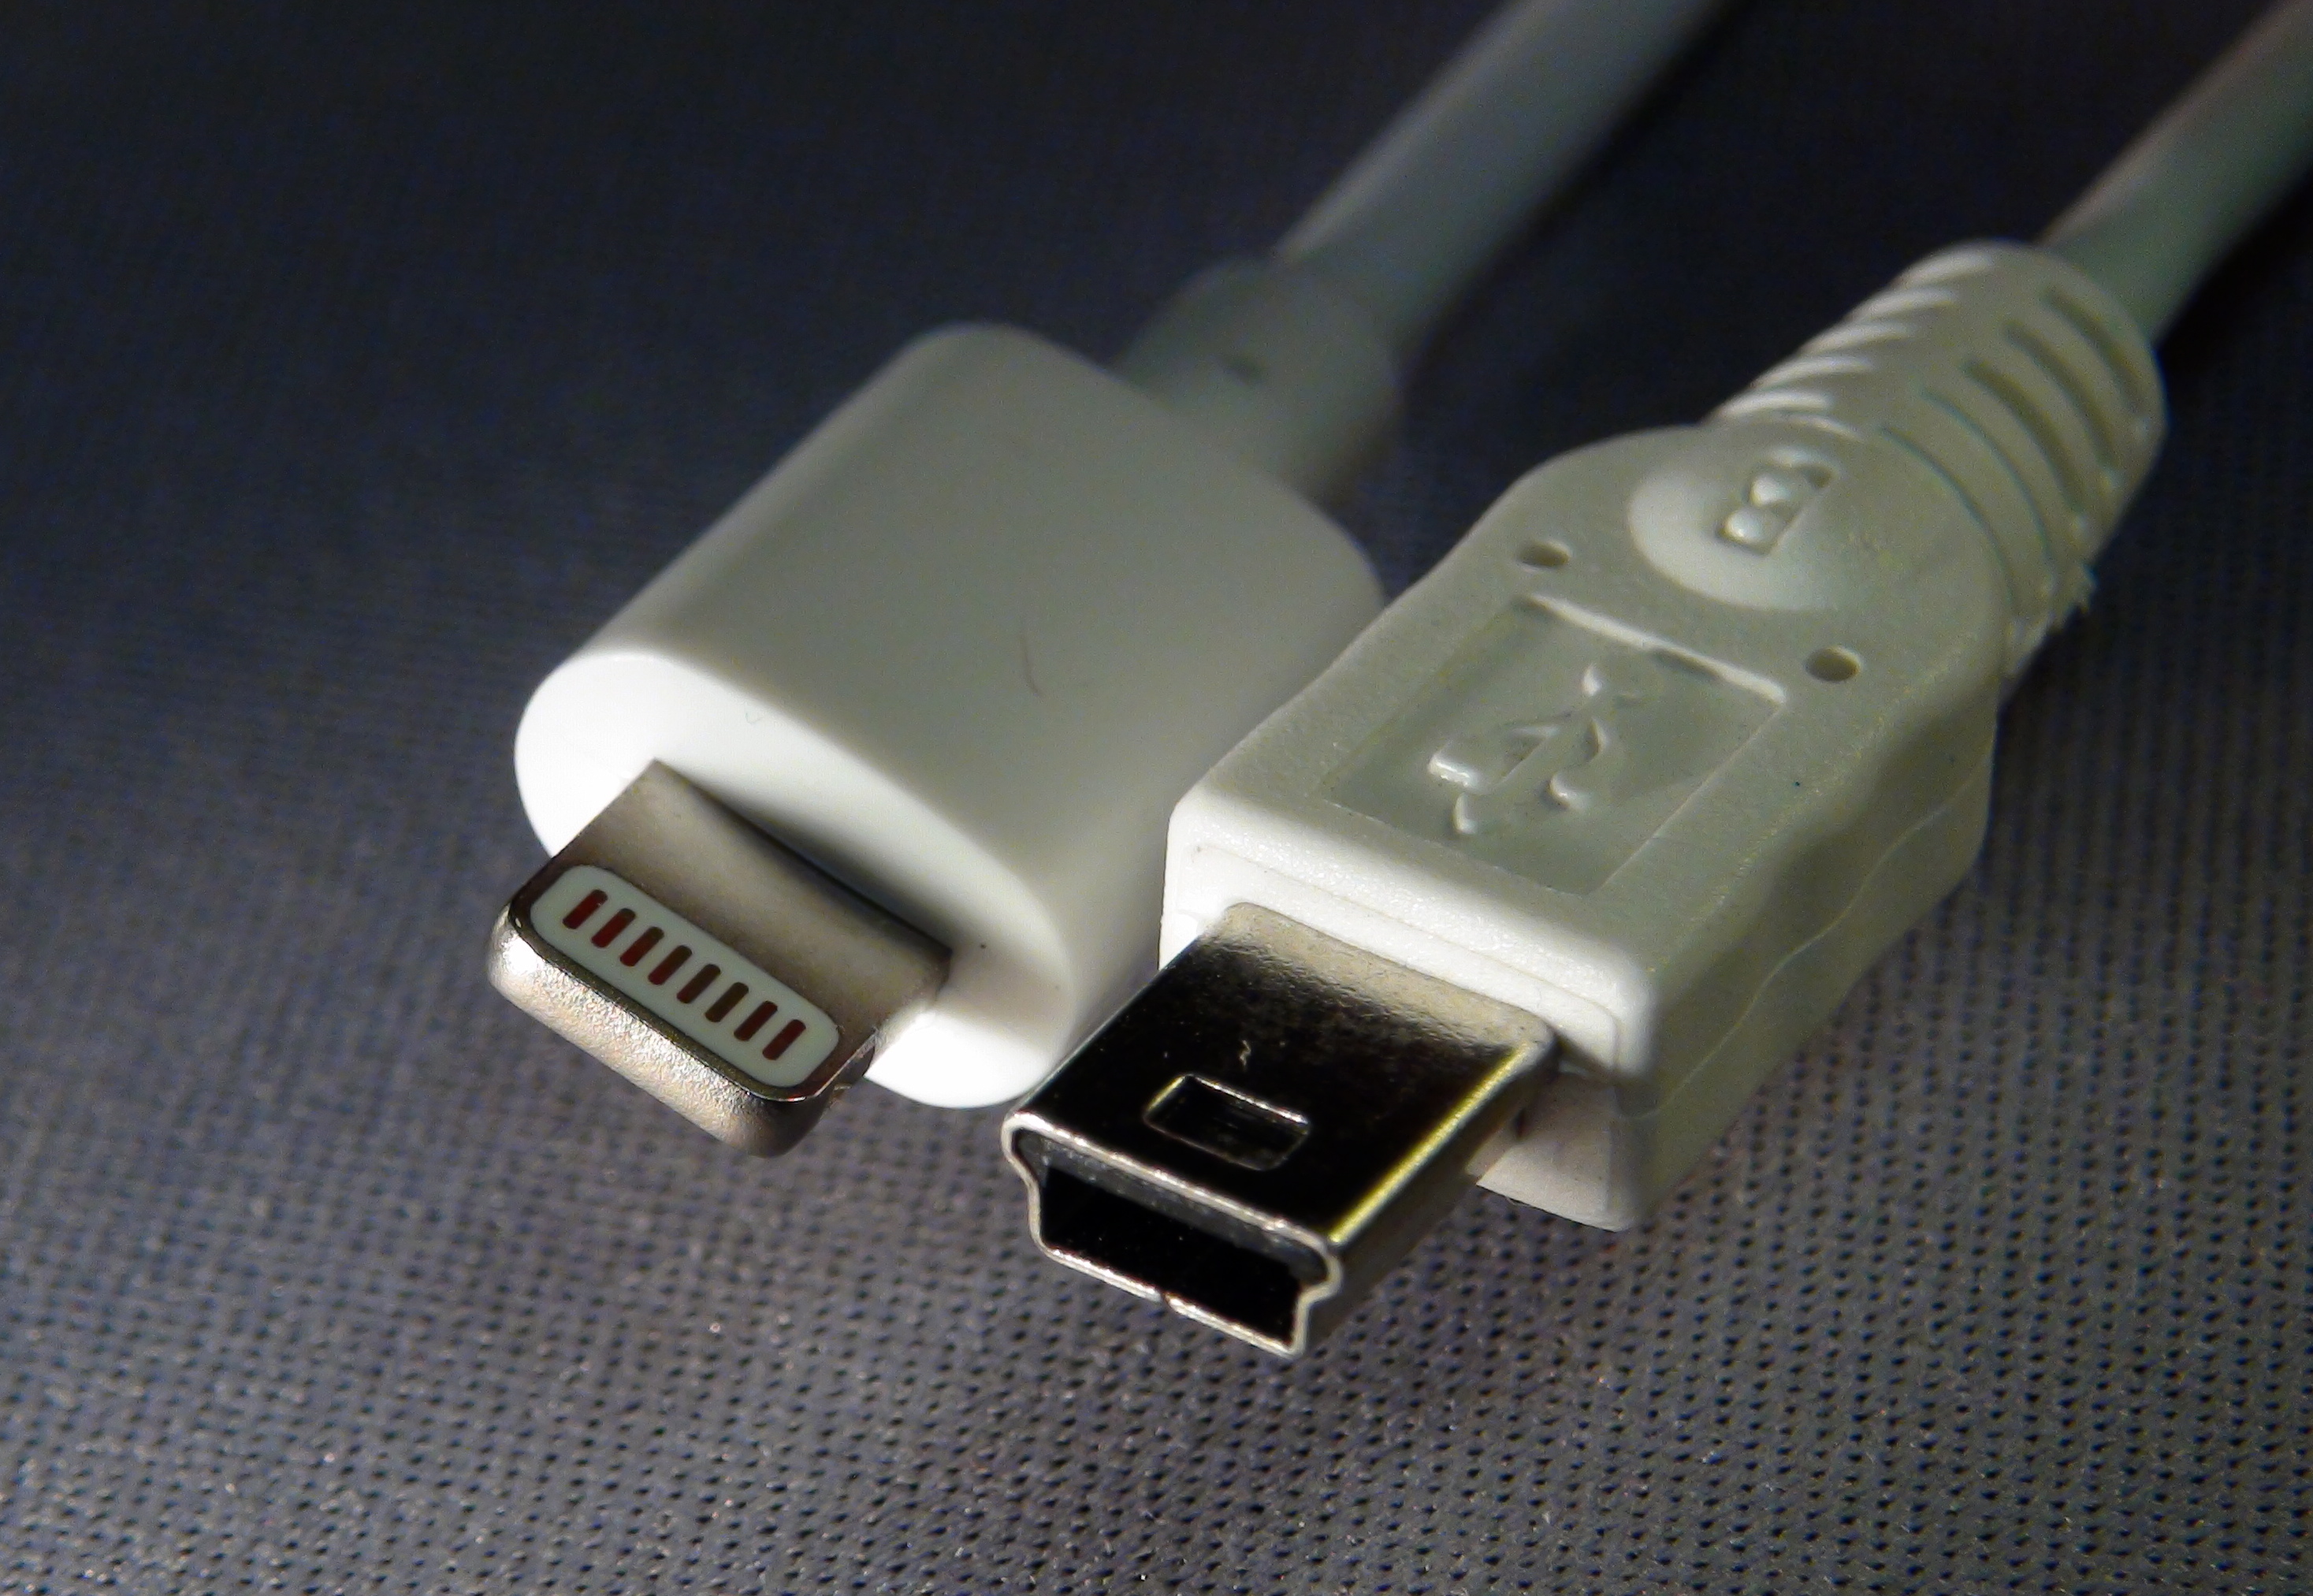 File:CO of Lightning and Mini-USB - Wikimedia Commons